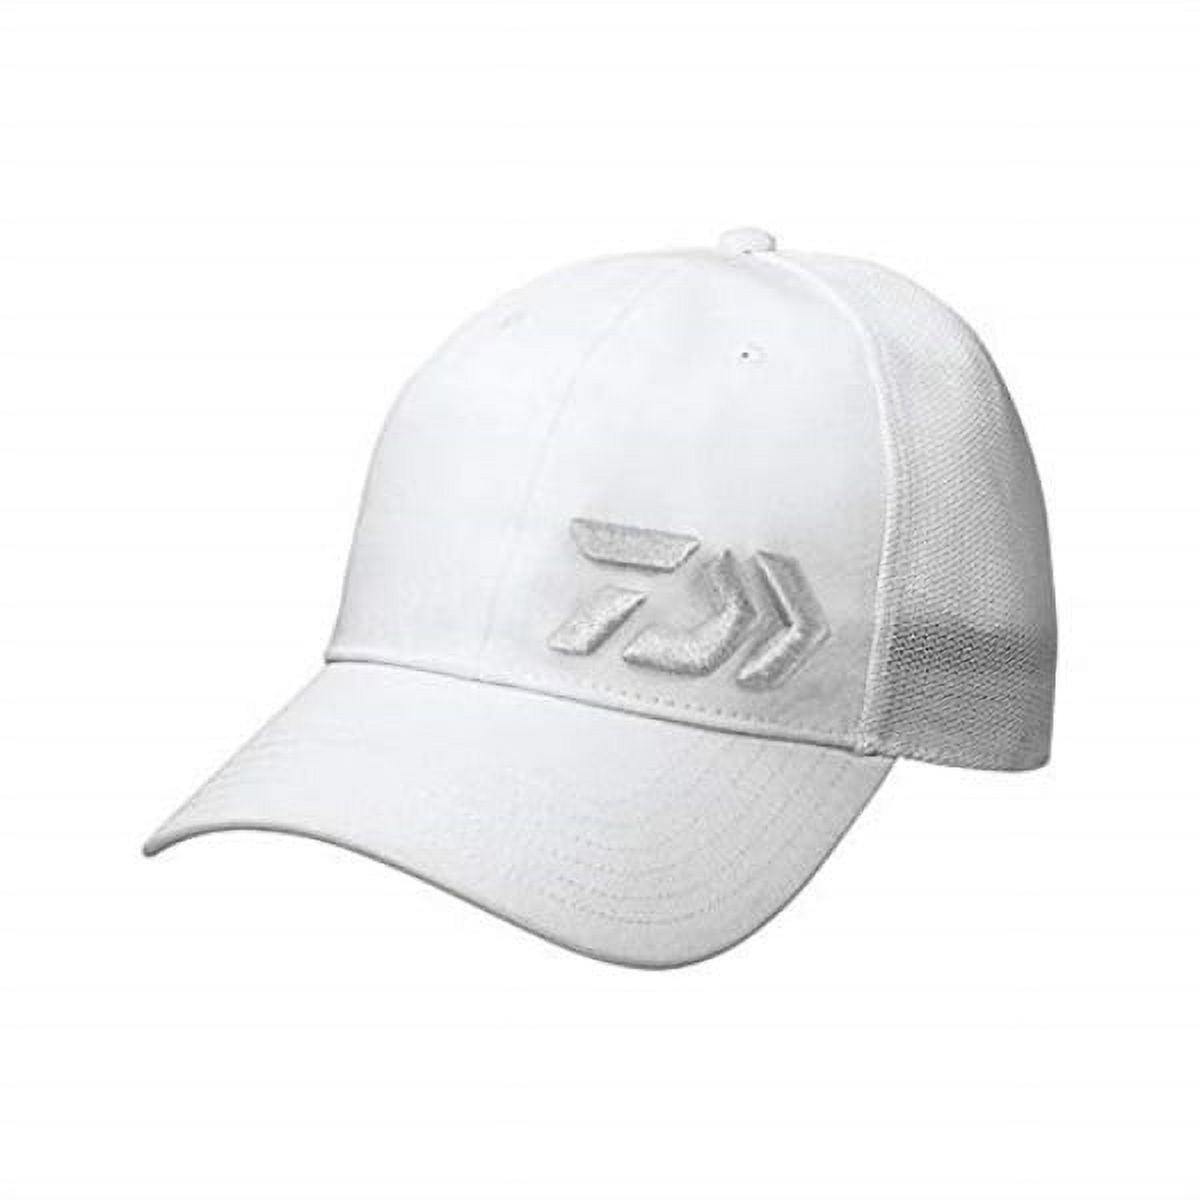 Daiwa Caps and Hat - Clothing